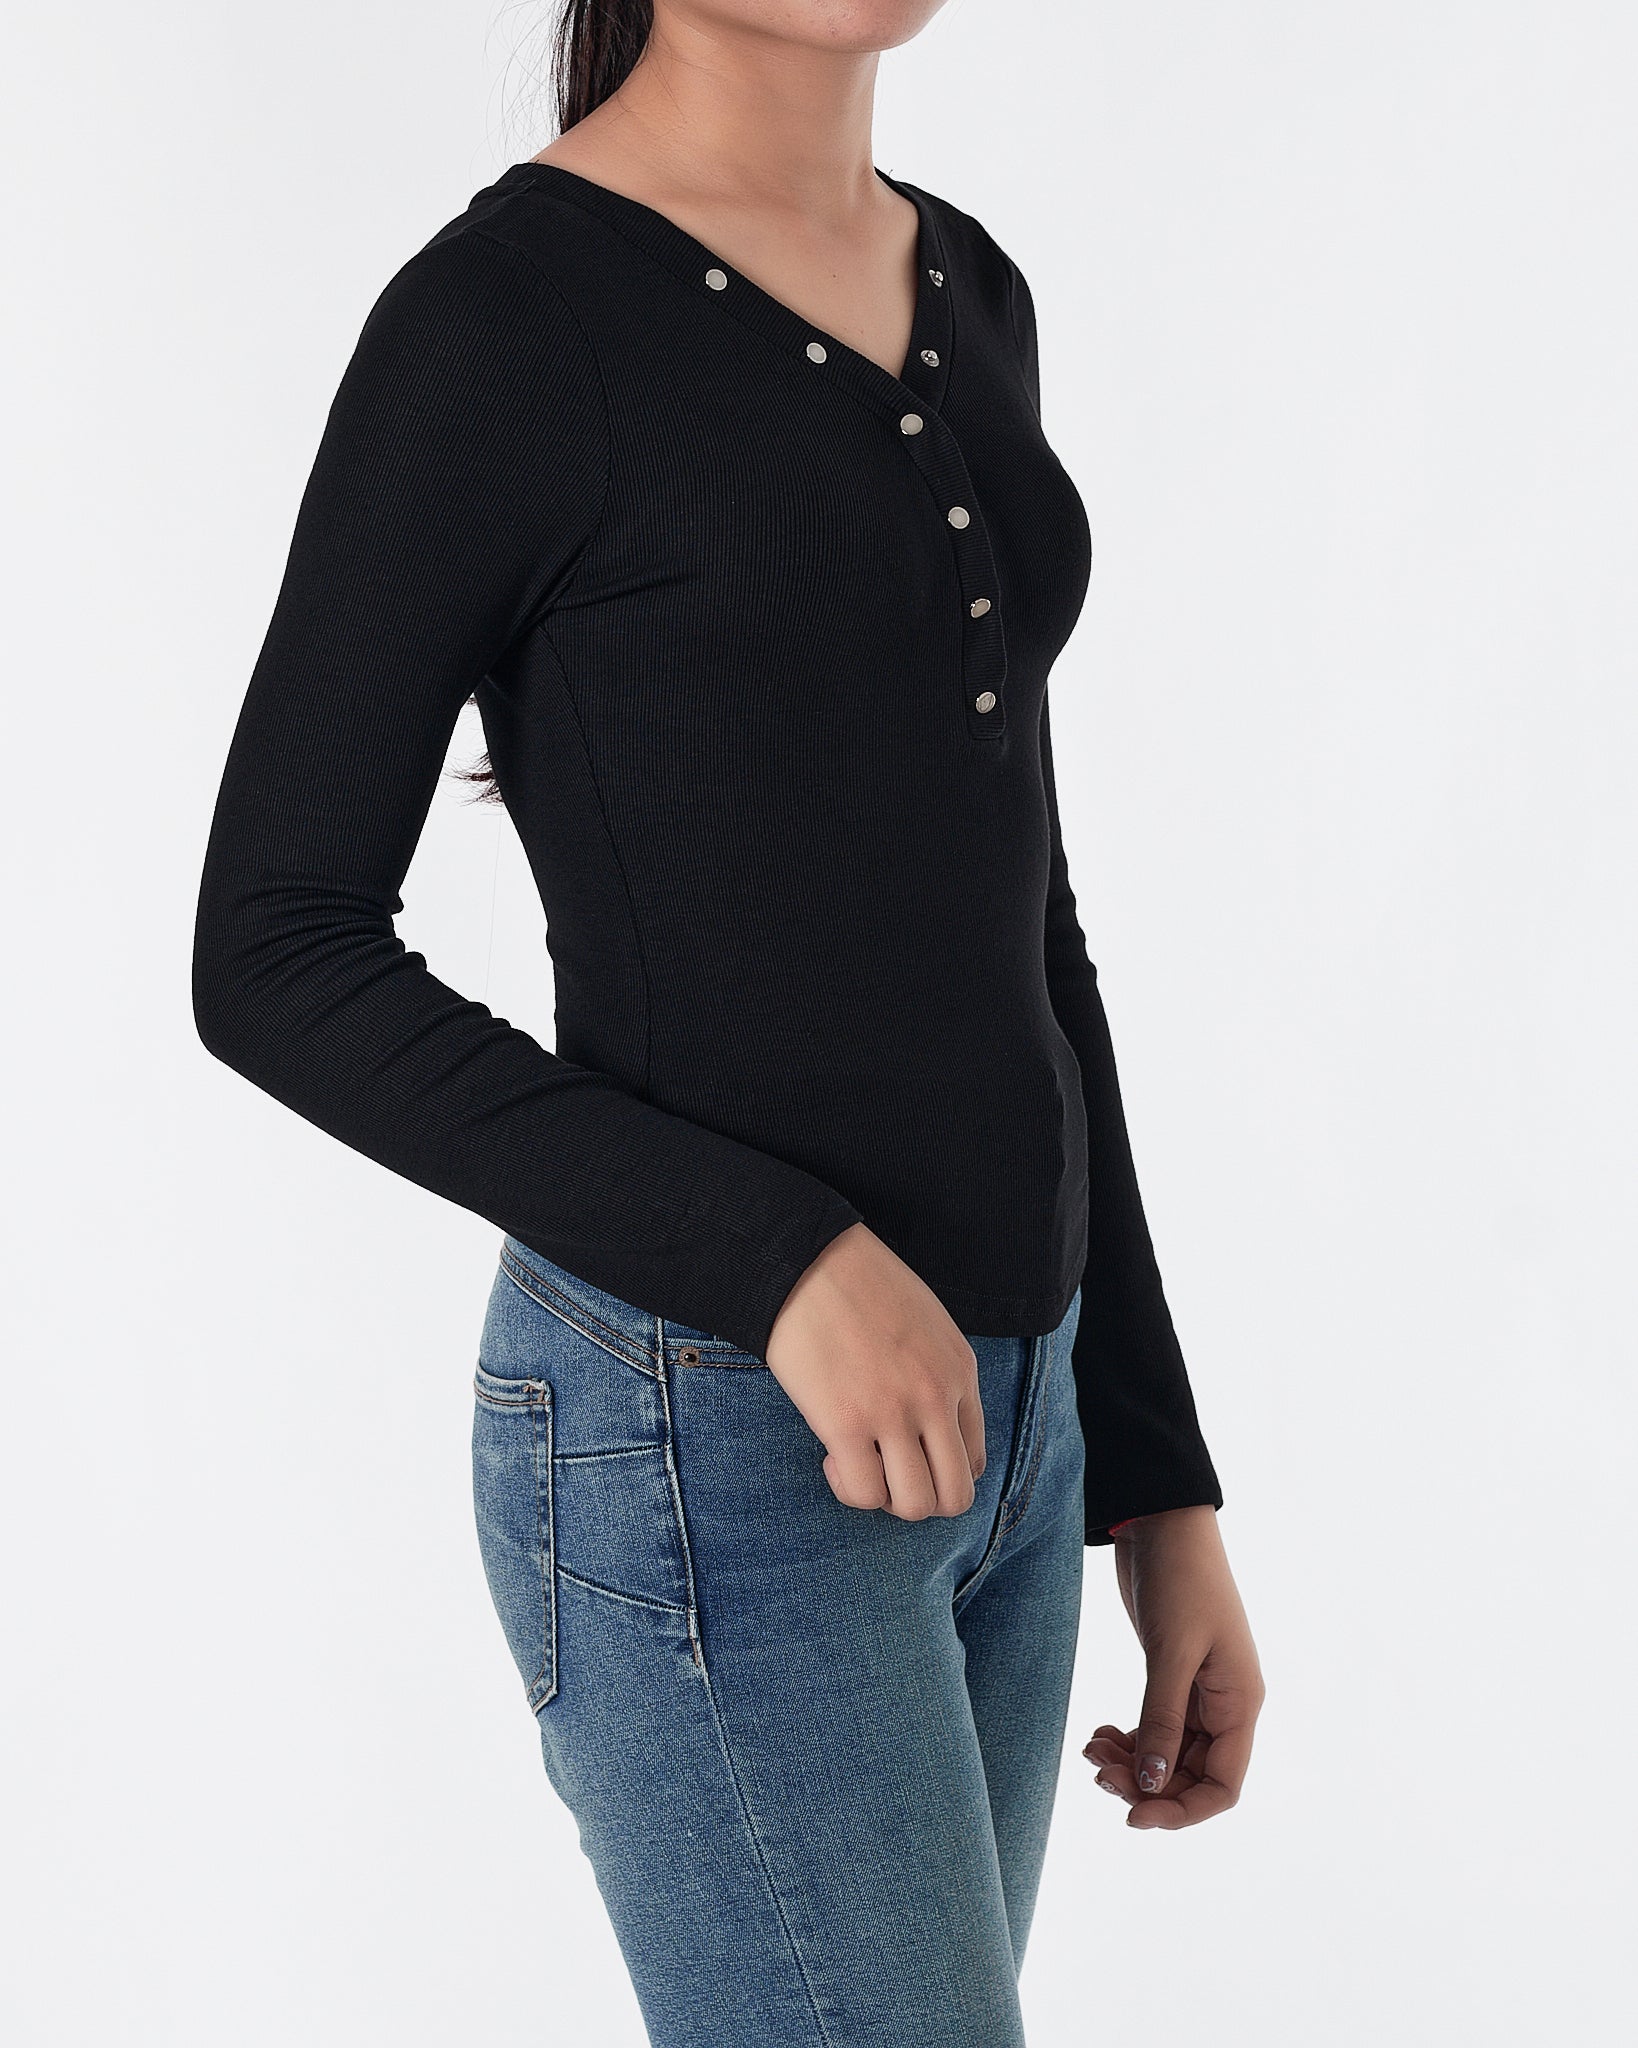 Lady V Neck Black T-Shirt Long Sleeve 12.90